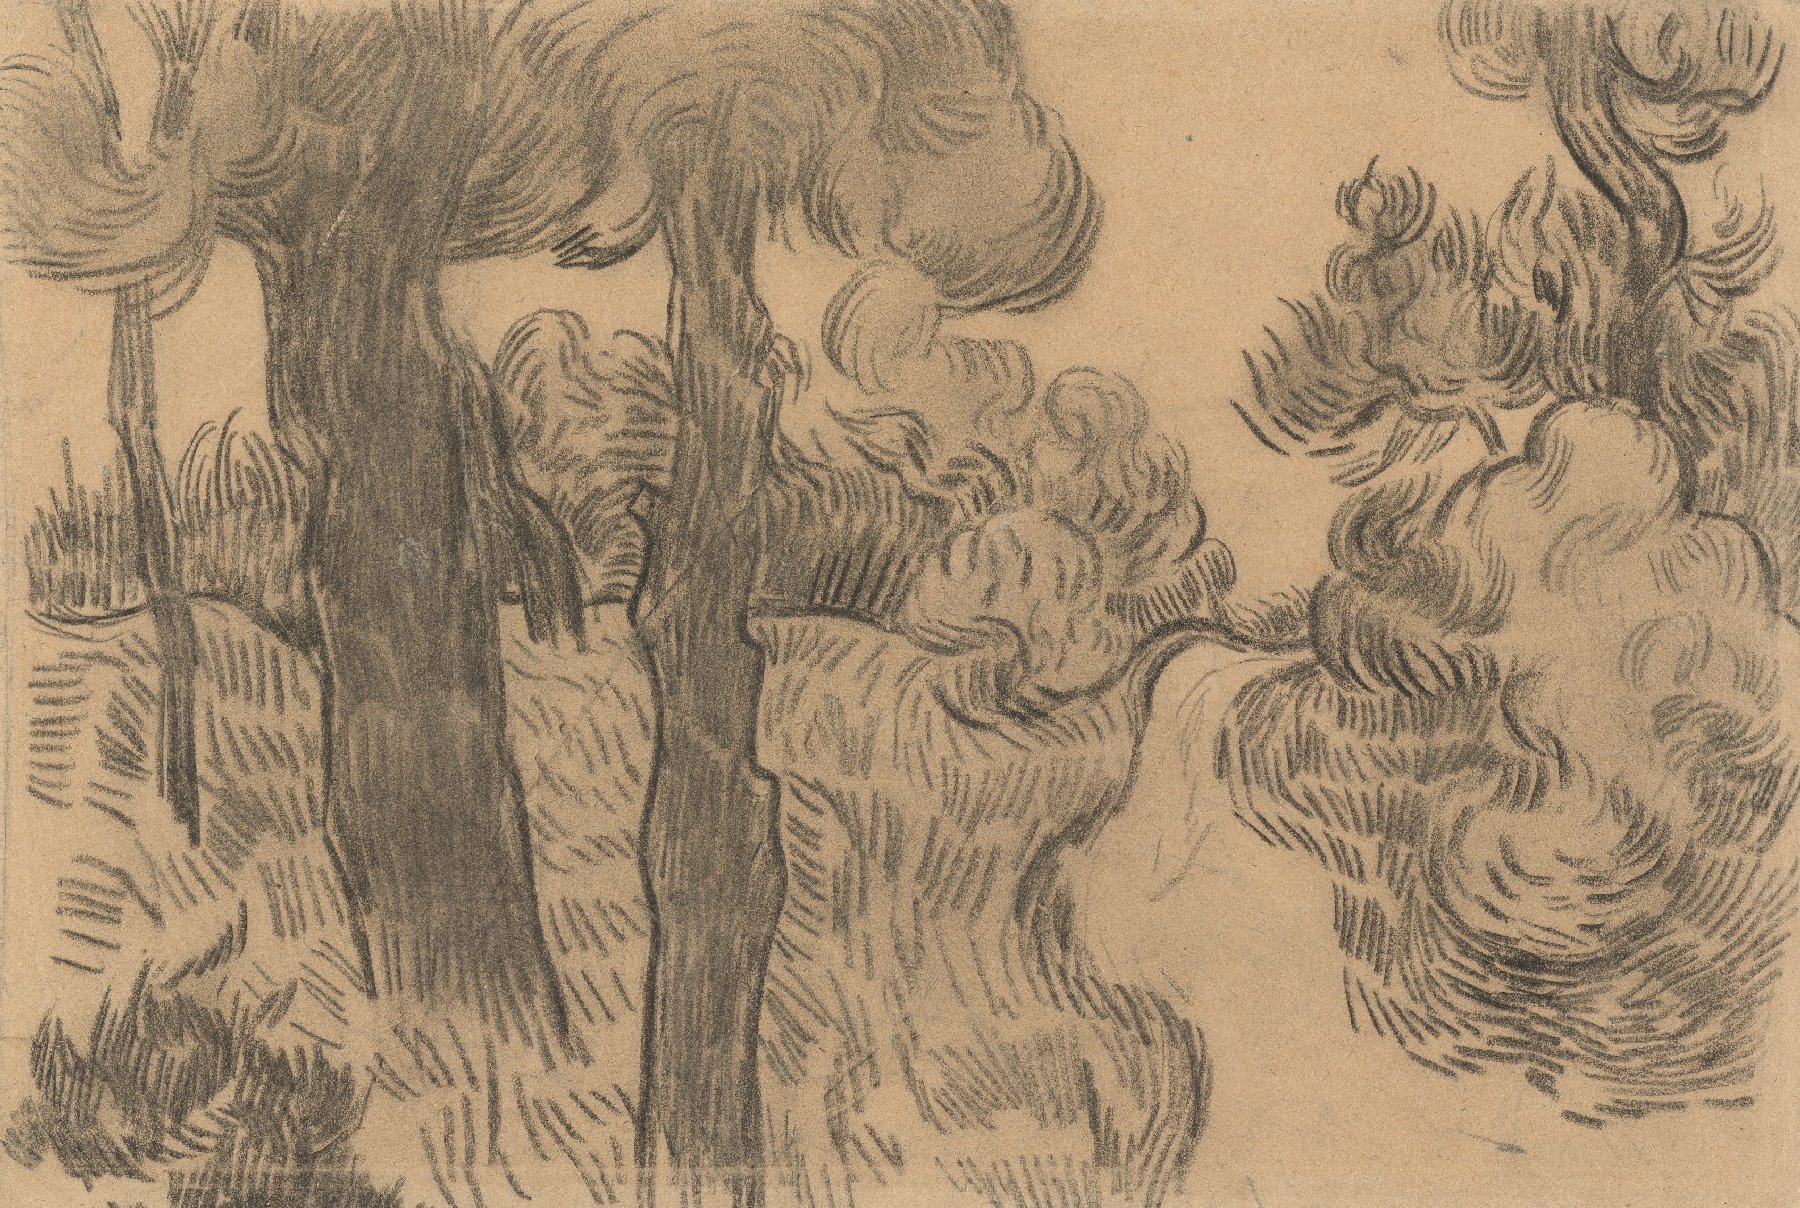 Pijnbomen naast een weg Vincent van Gogh (1853 - 1890), Saint-Rémy-de-Provence, oktober 1889